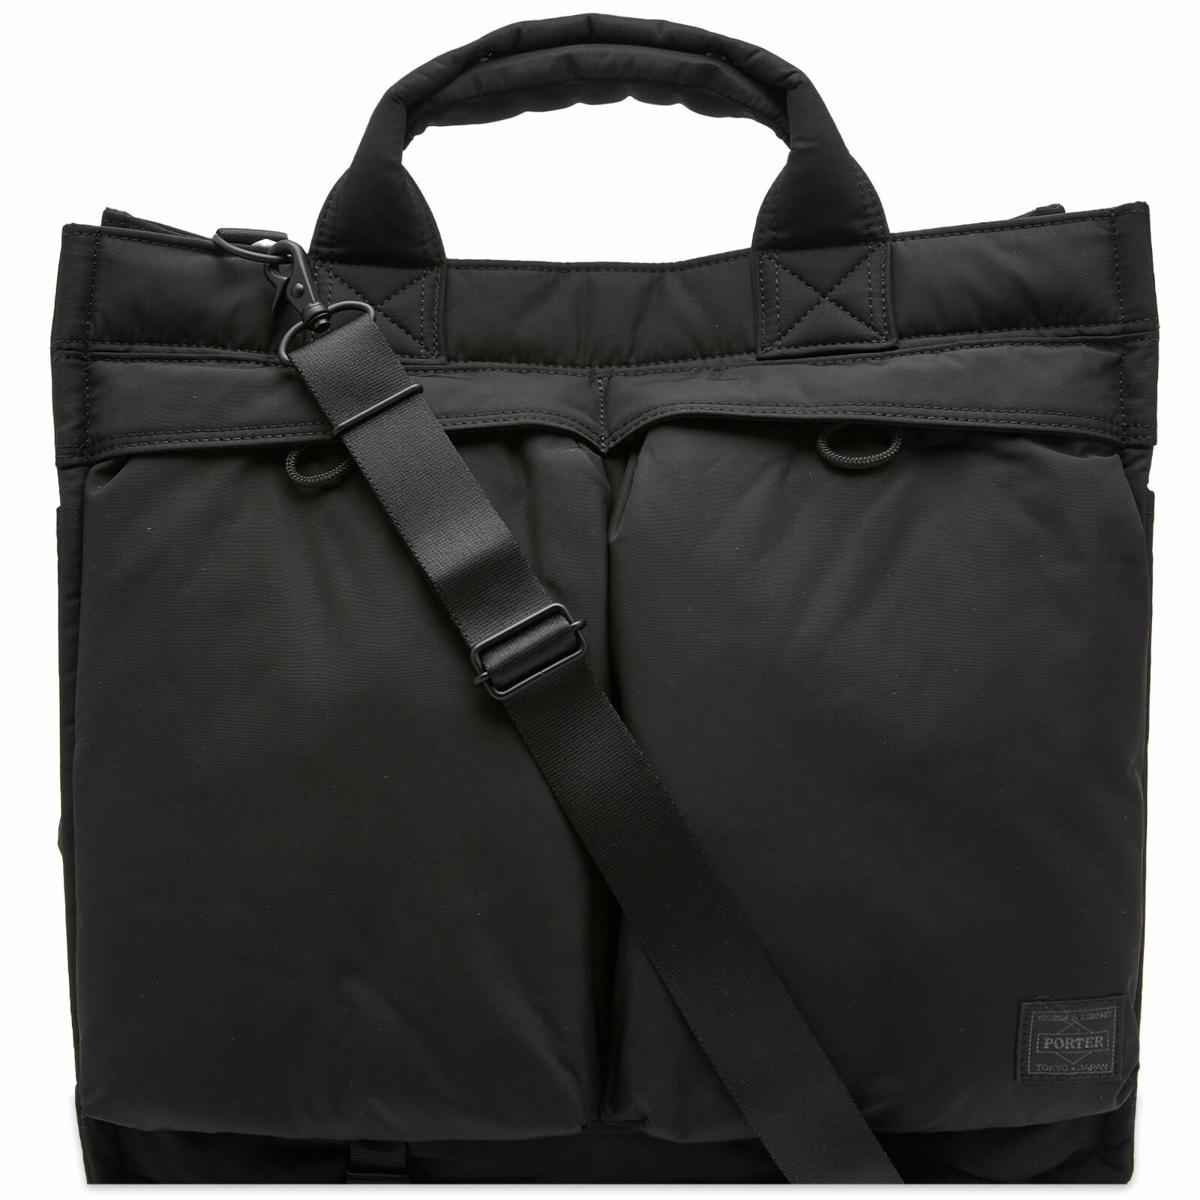 Porter-Yoshida & Co. Senses Tote Bag - Large in Black Porter-Yoshida & Co.